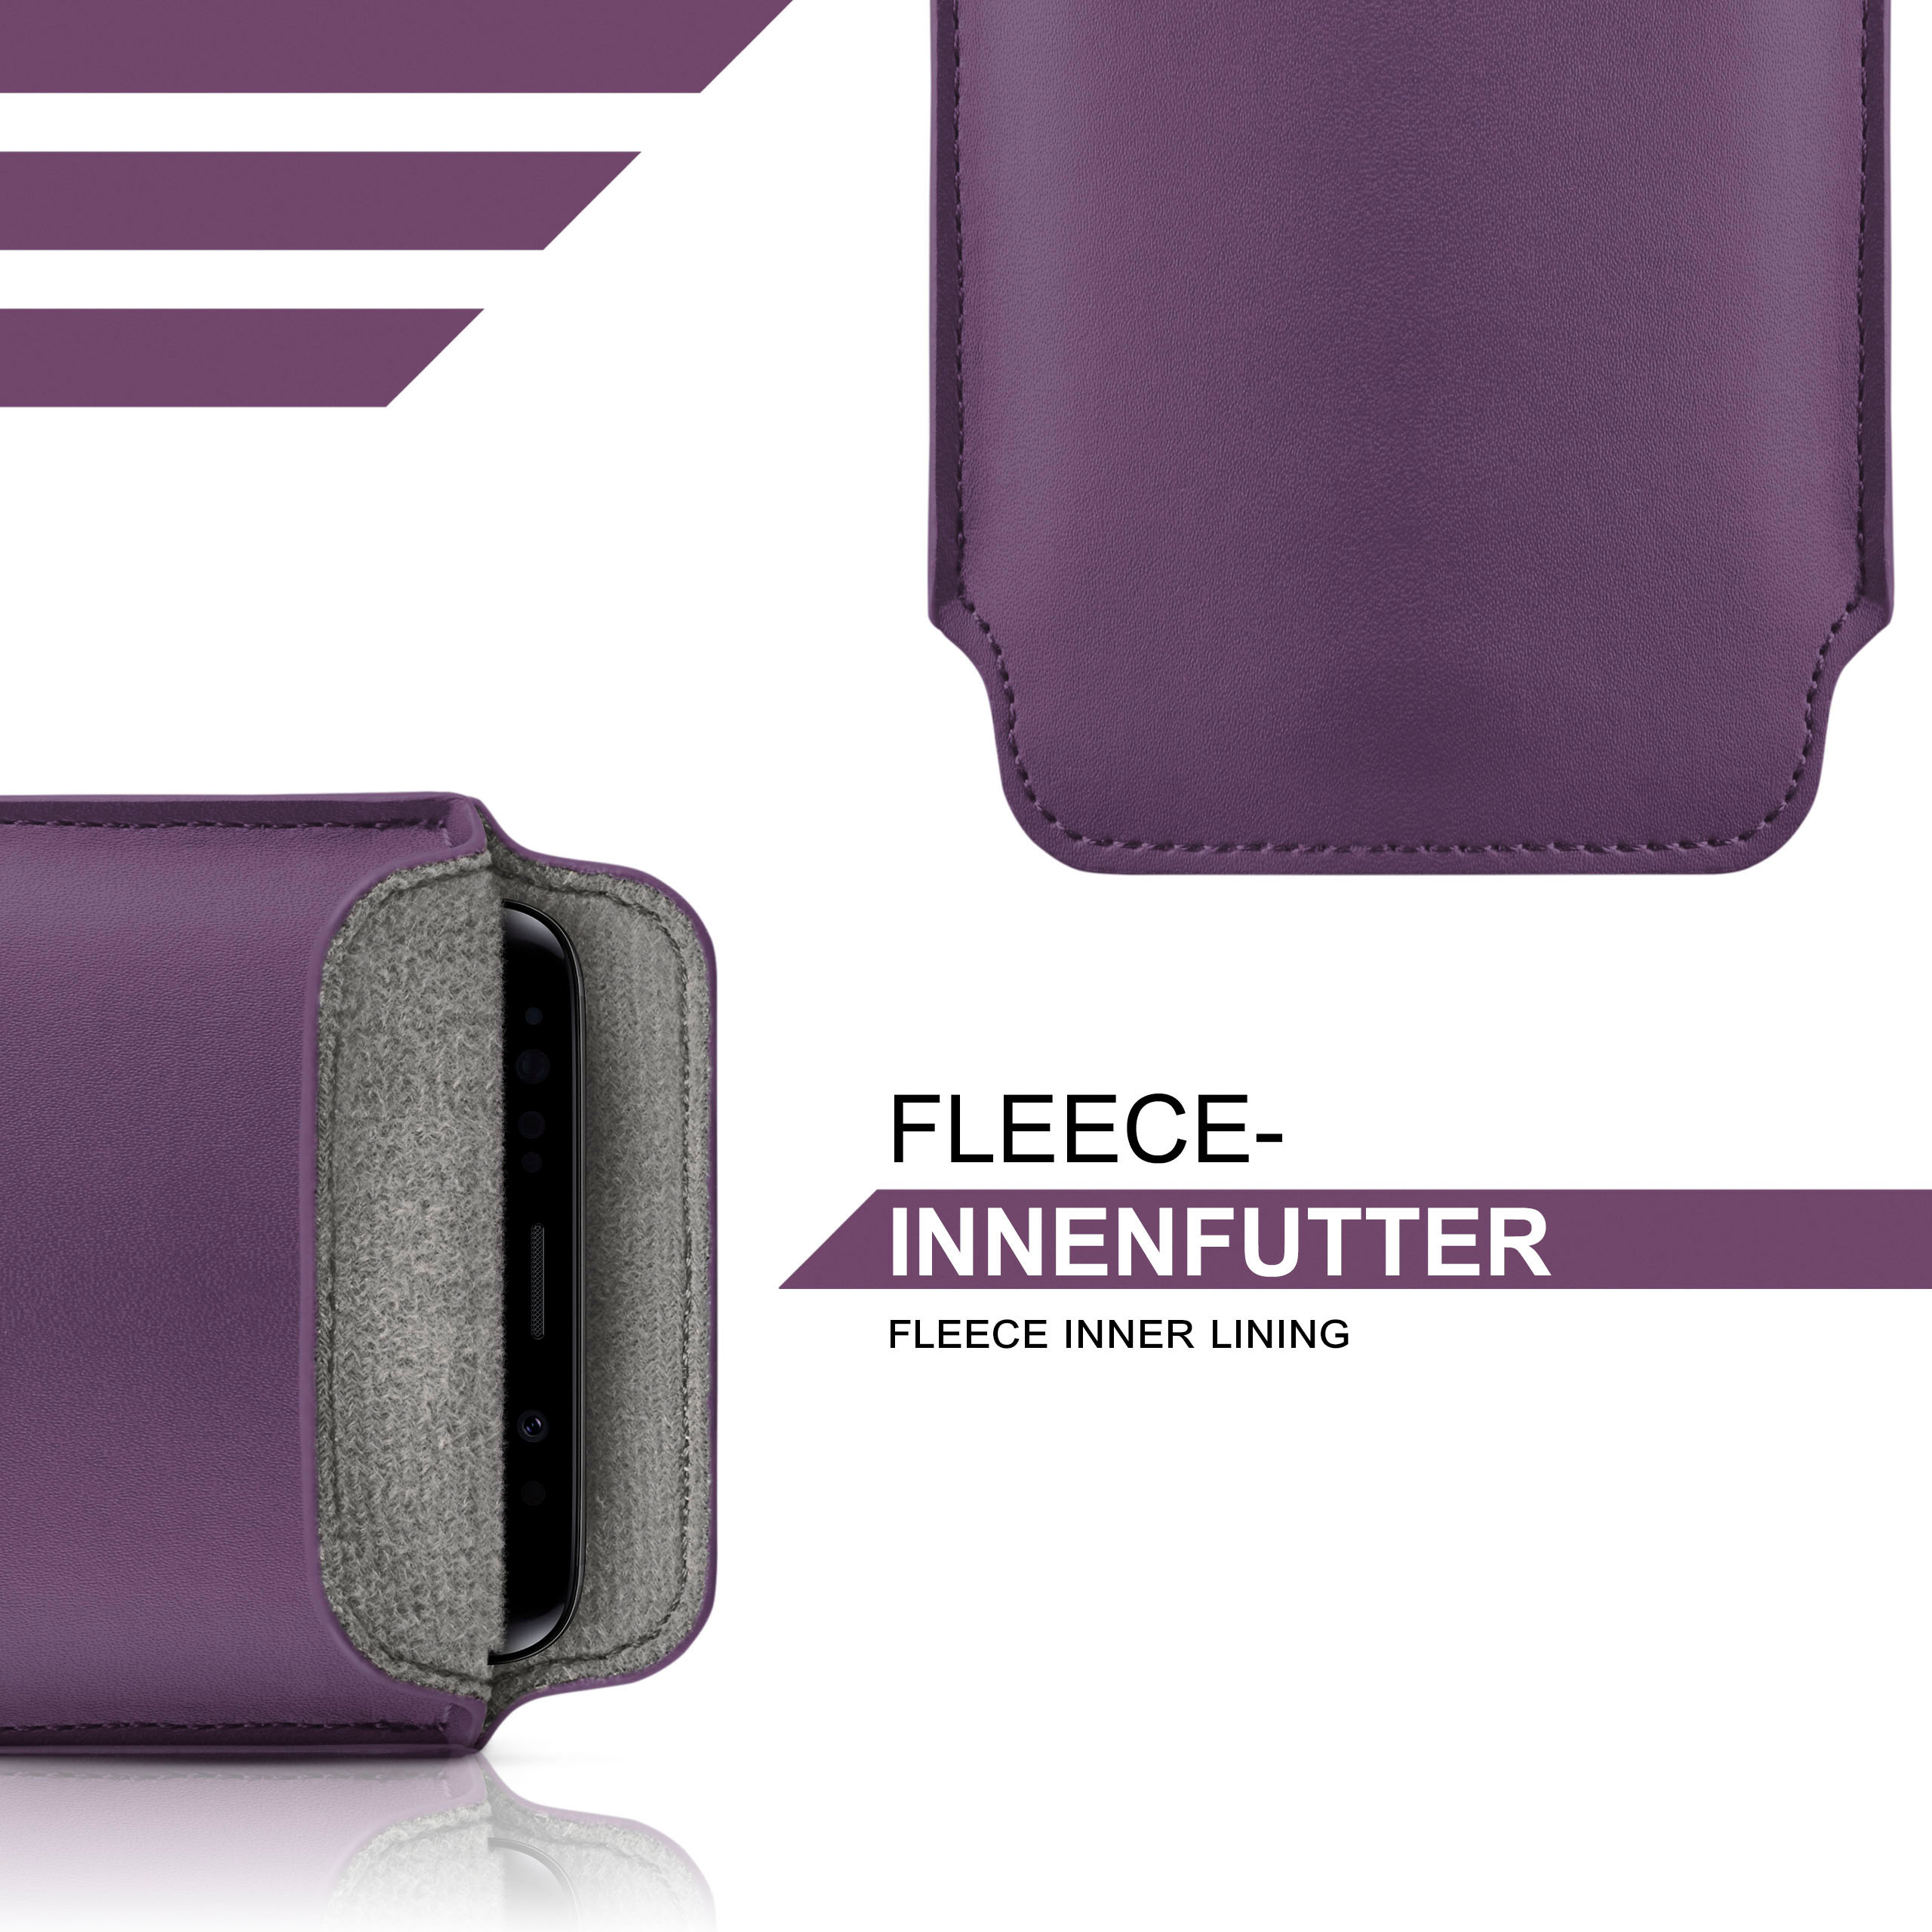 Full G 2, Slide Flex Case, Indigo-Violet Cover, MOEX LG,